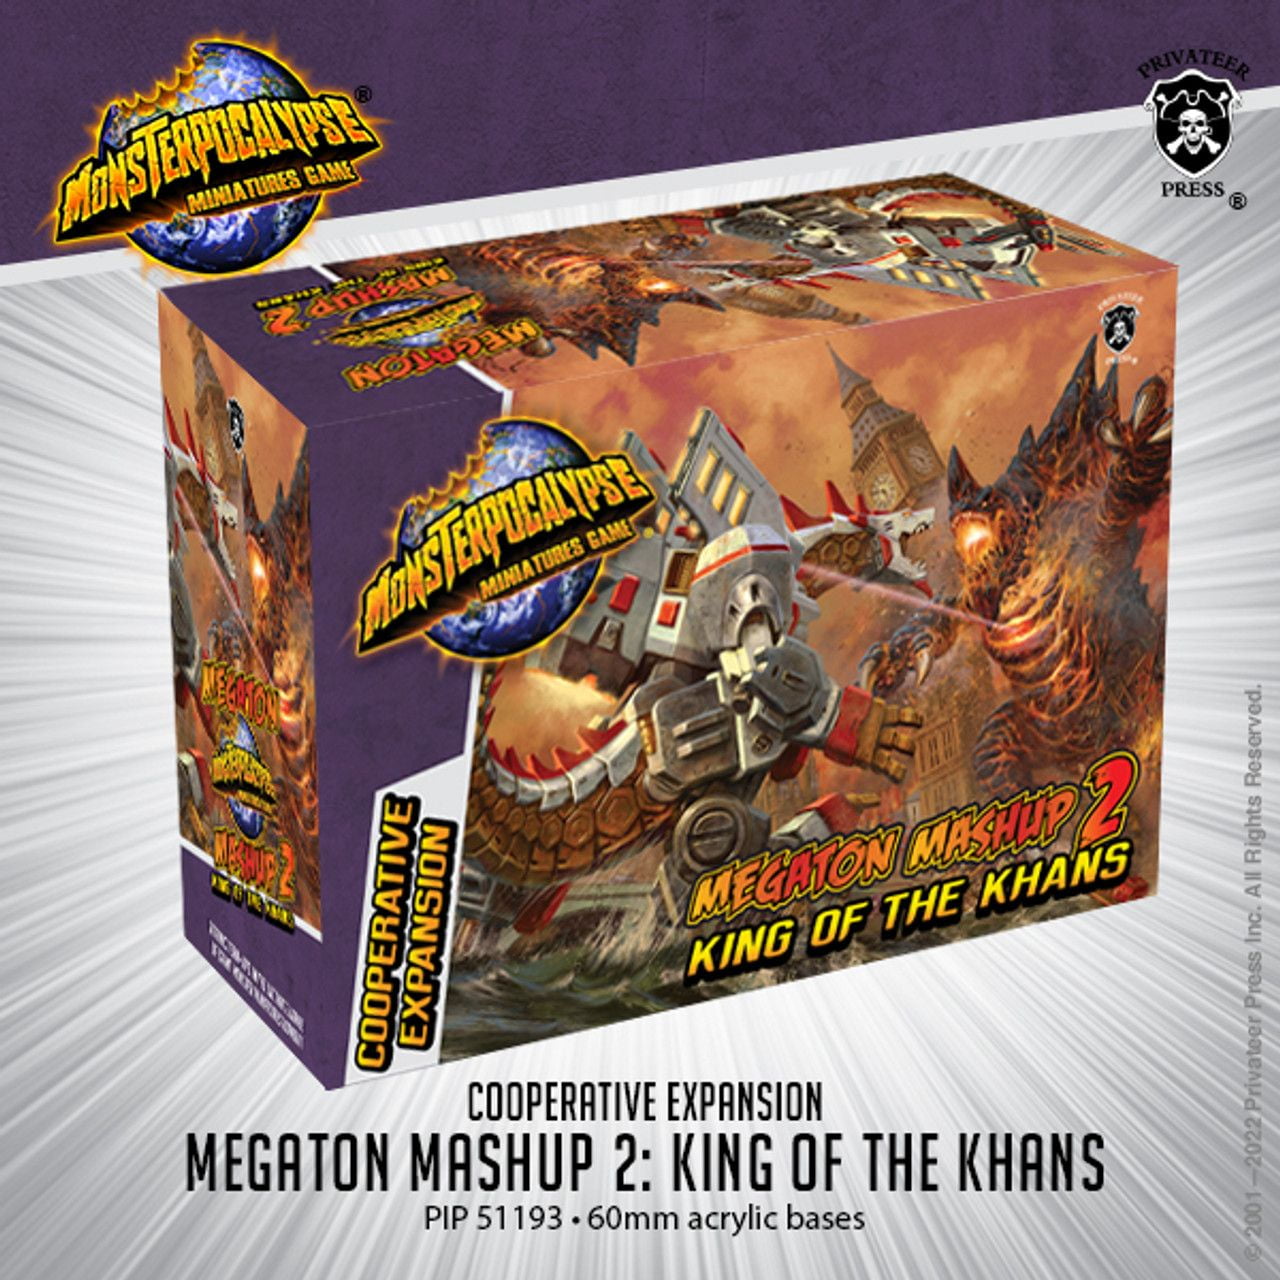 Megaton Mashup 2: King of the Khans